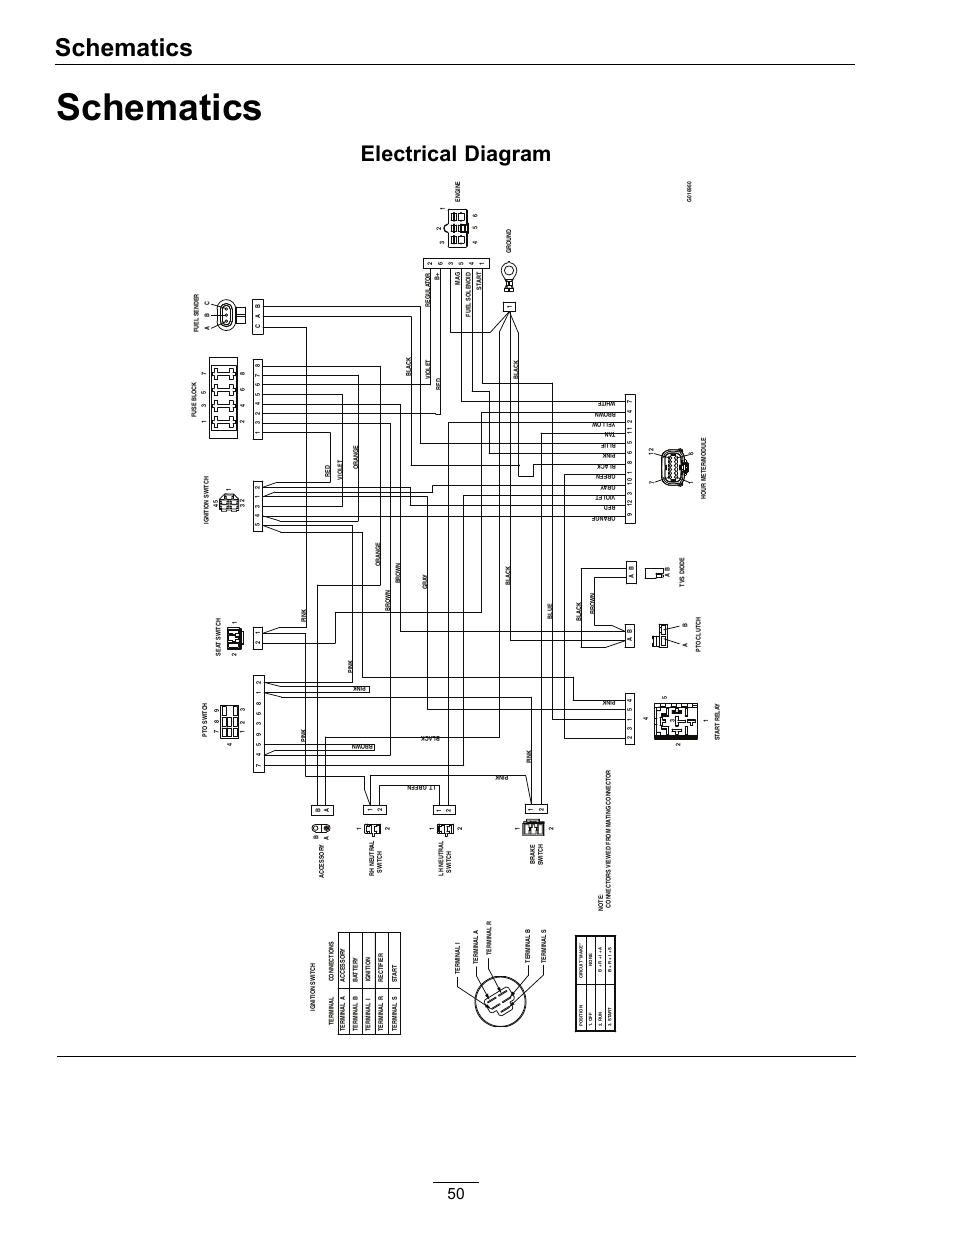 4 wire welling motor wiring diagram